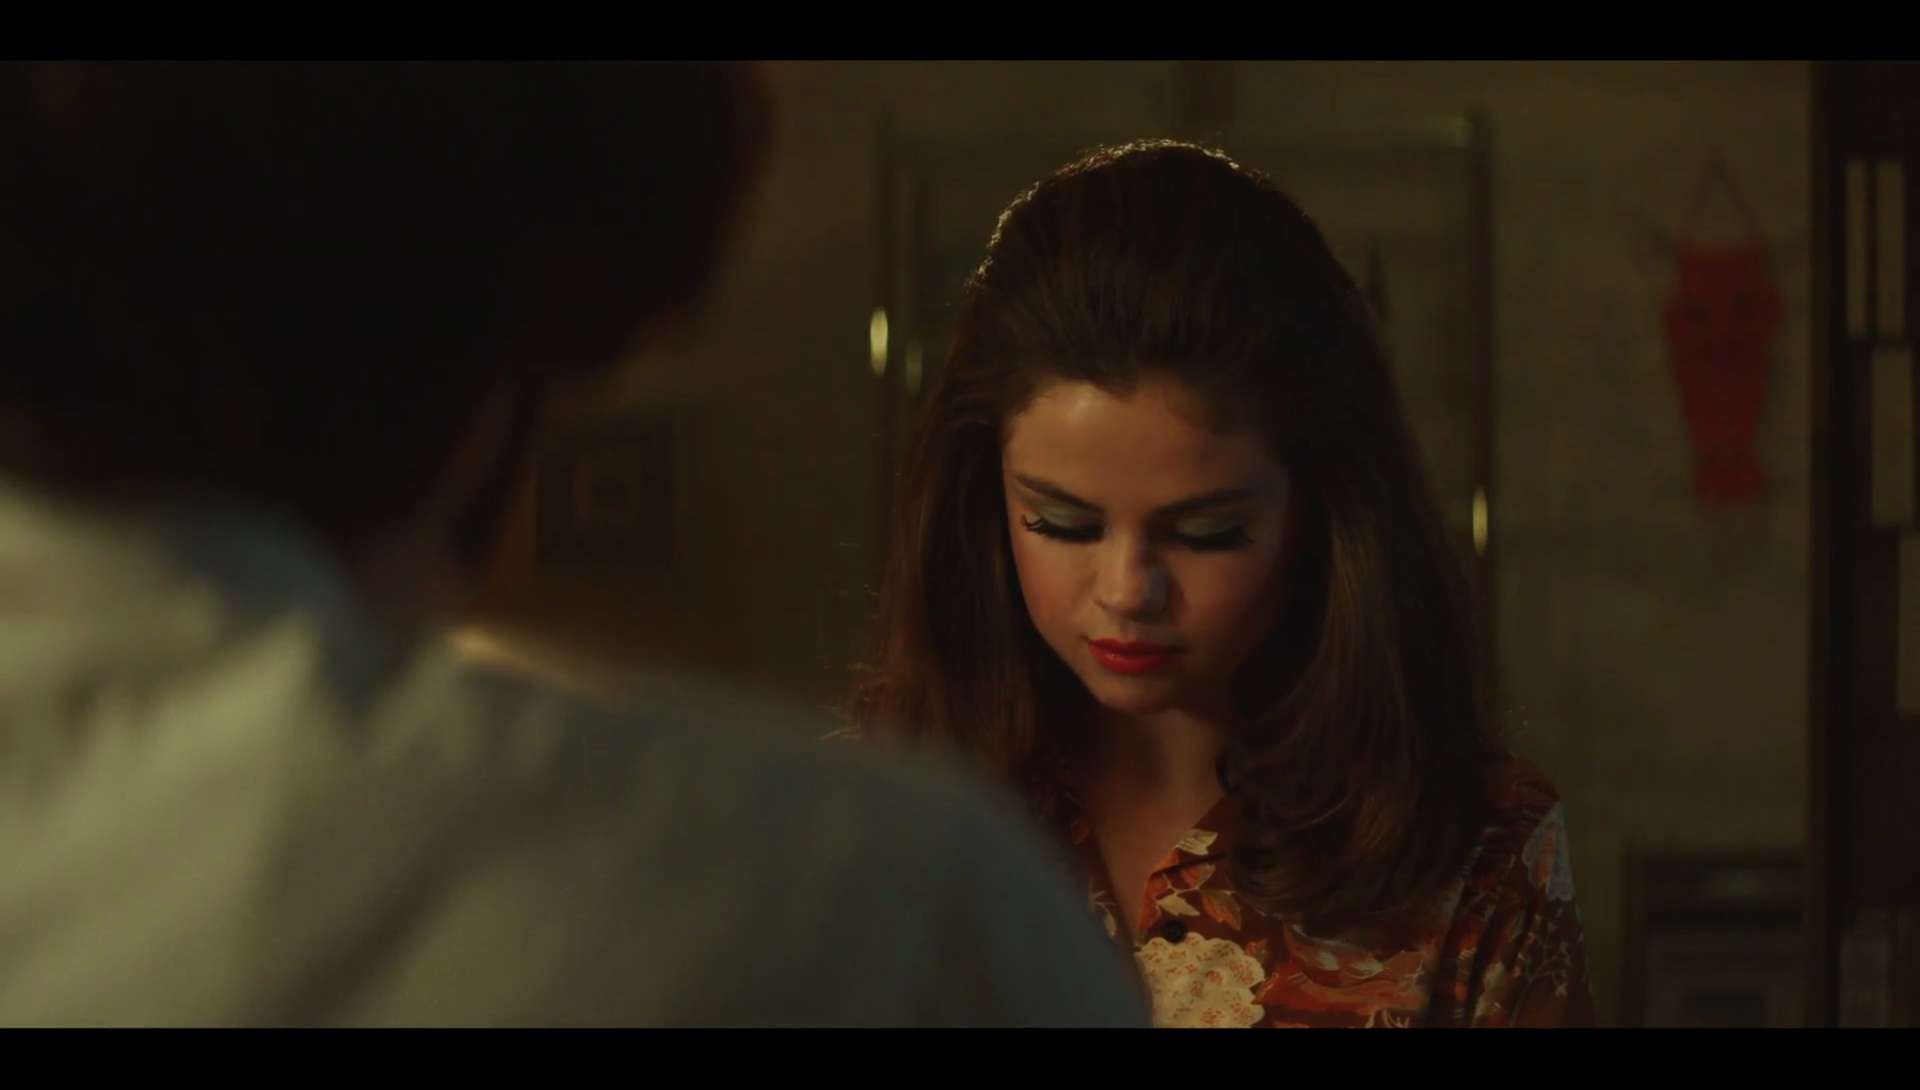 Selena_Gomez_-_Bad_Liar_MV_Screen_Captures-89.jpg